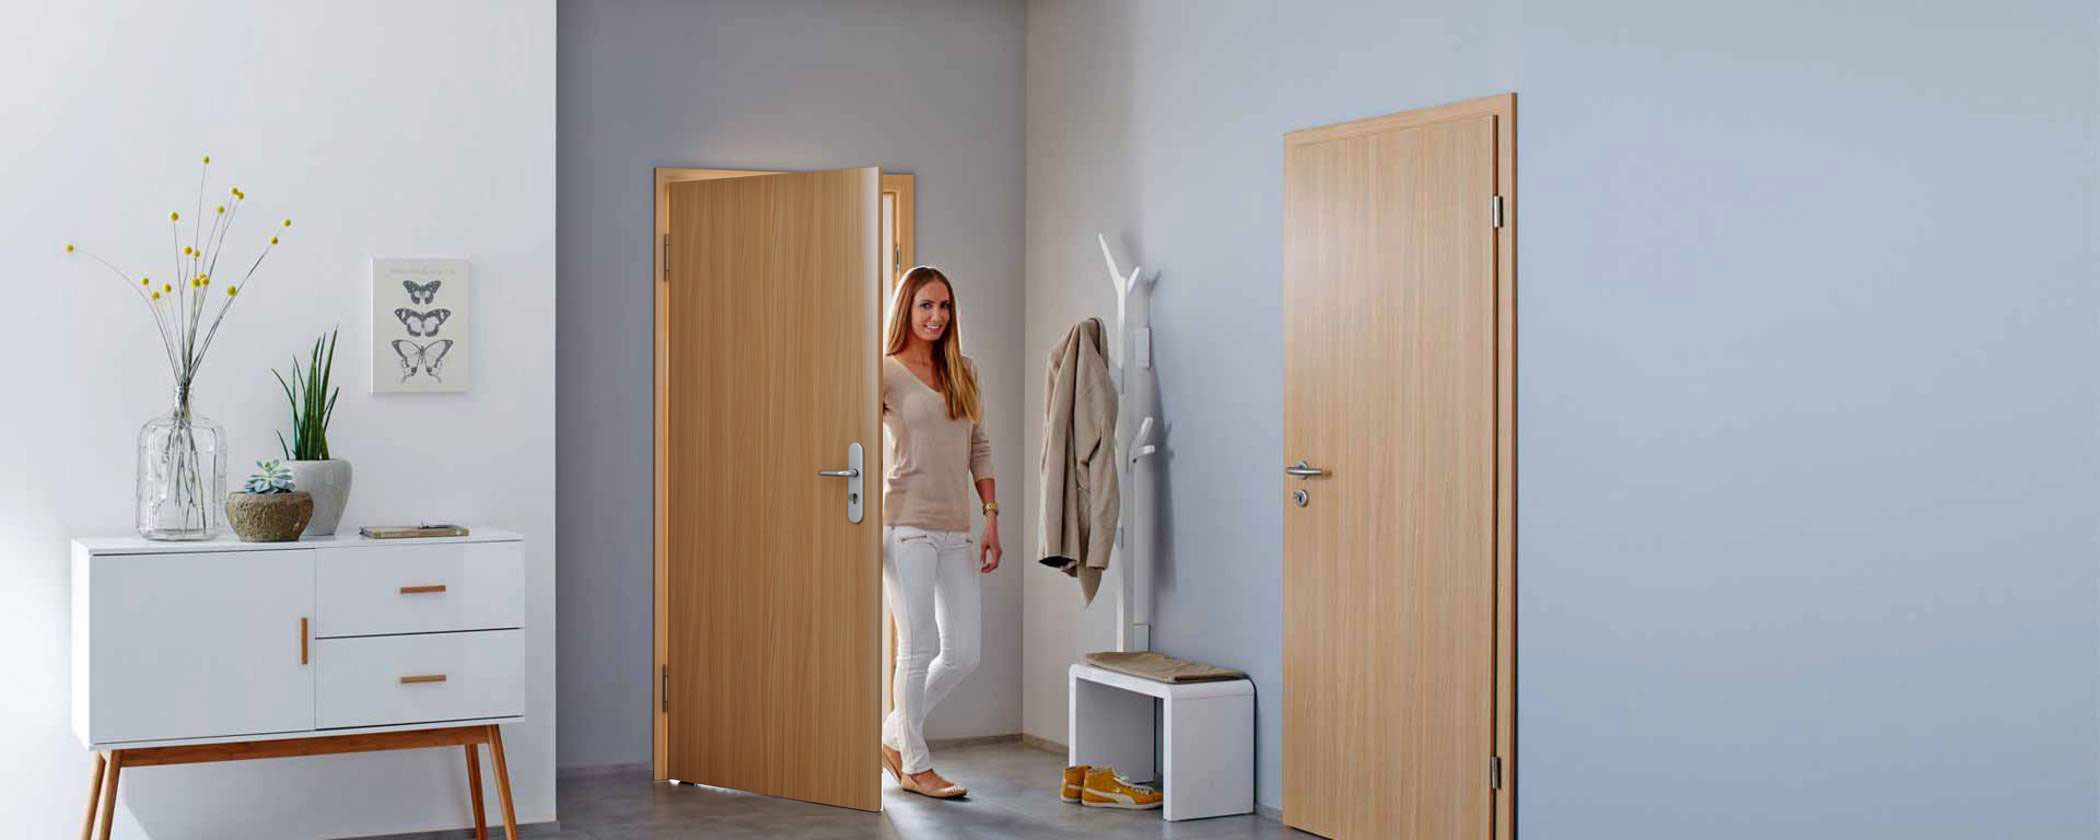 interior shot of woman walking through internal door